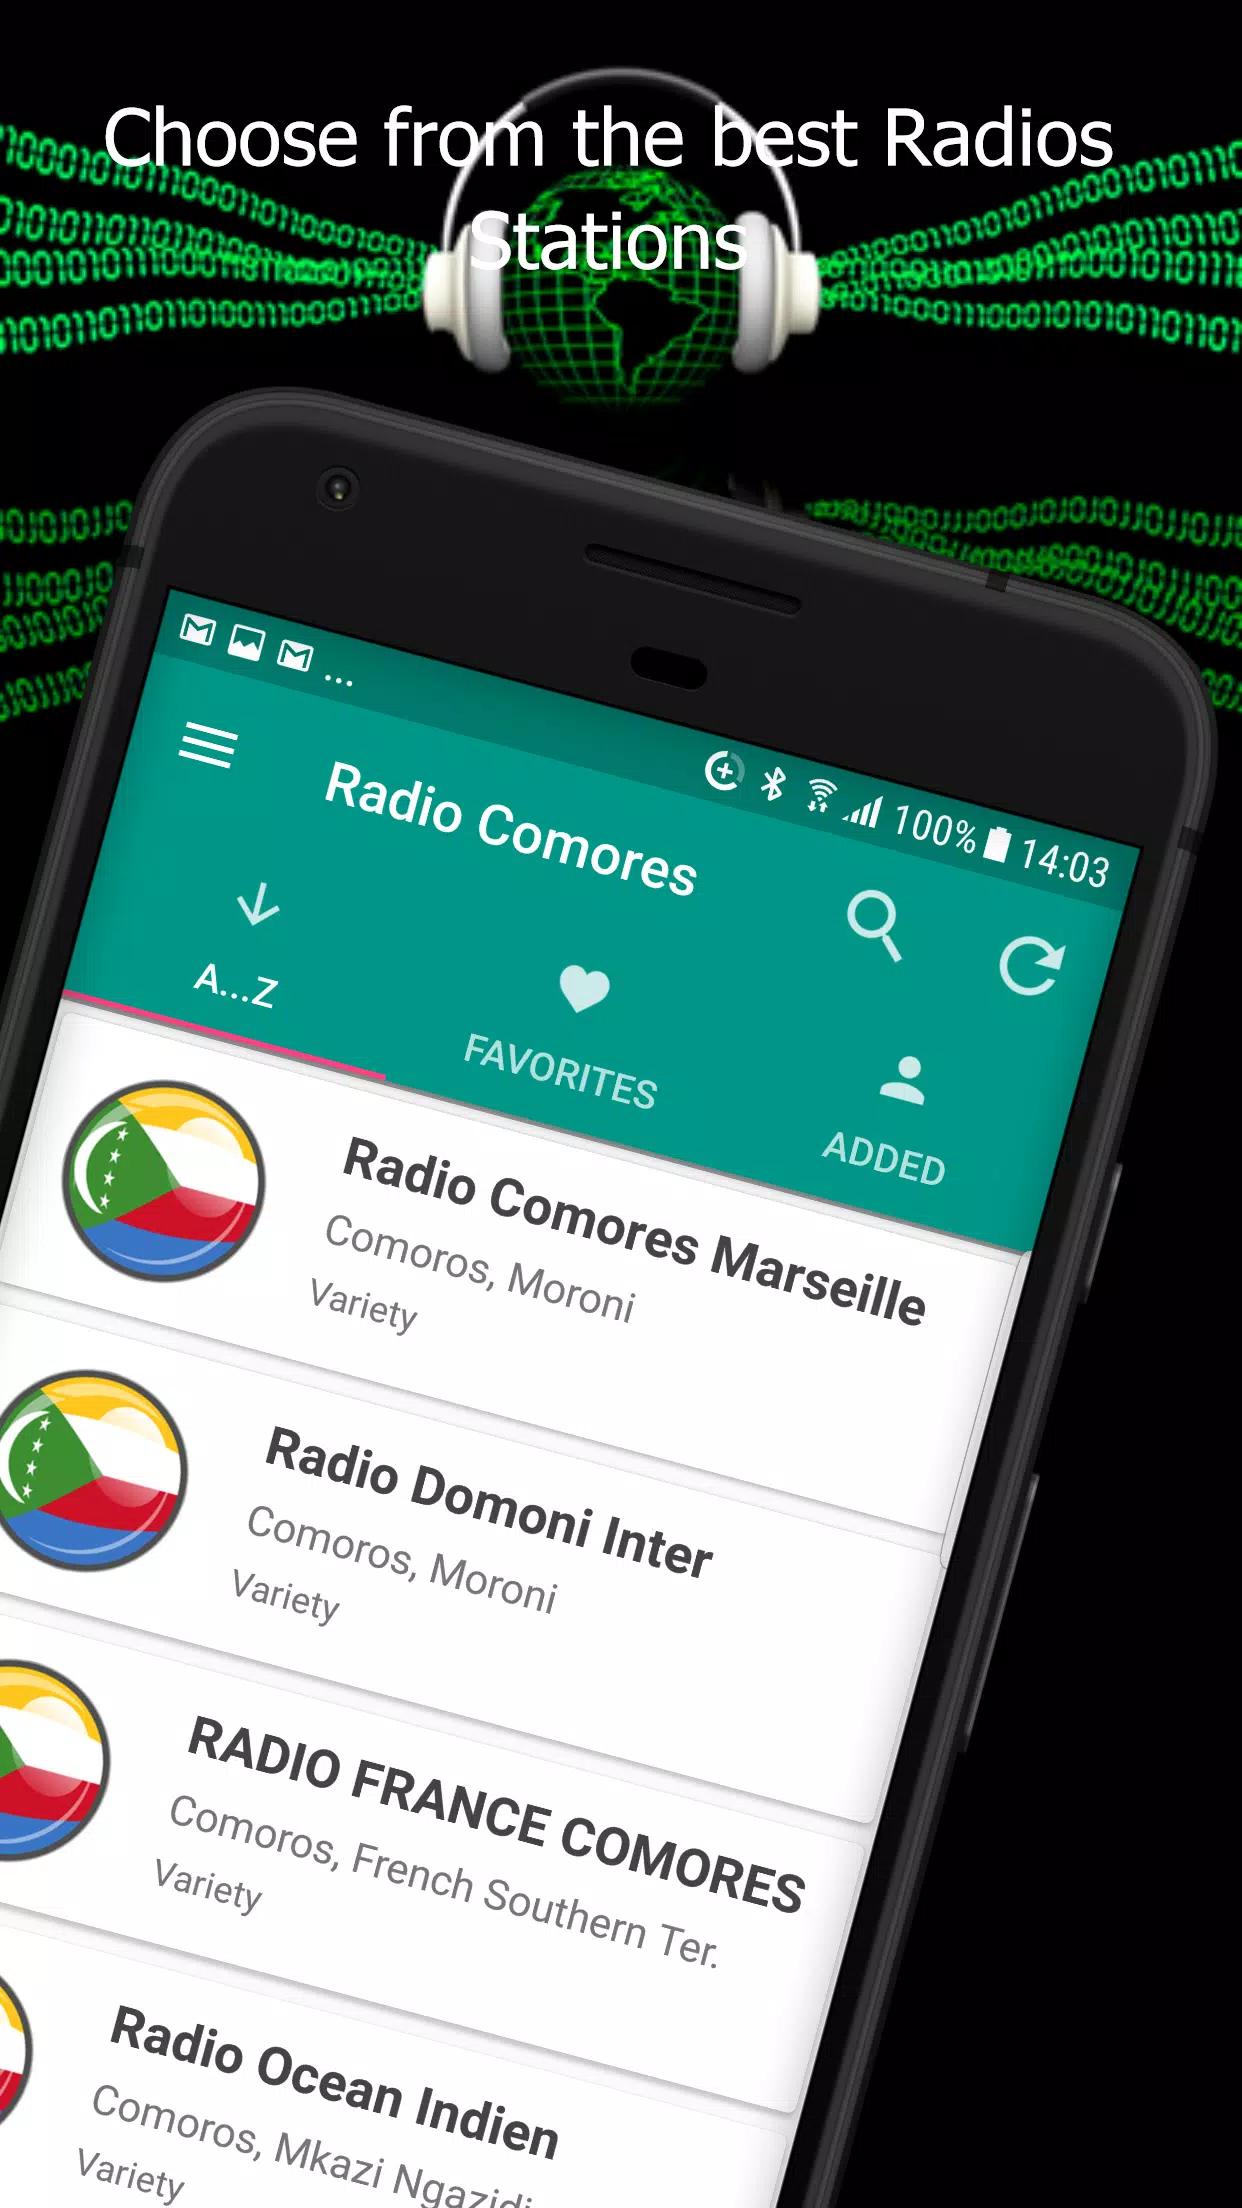 Comoros Islands Radio Stations APK voor Android Download